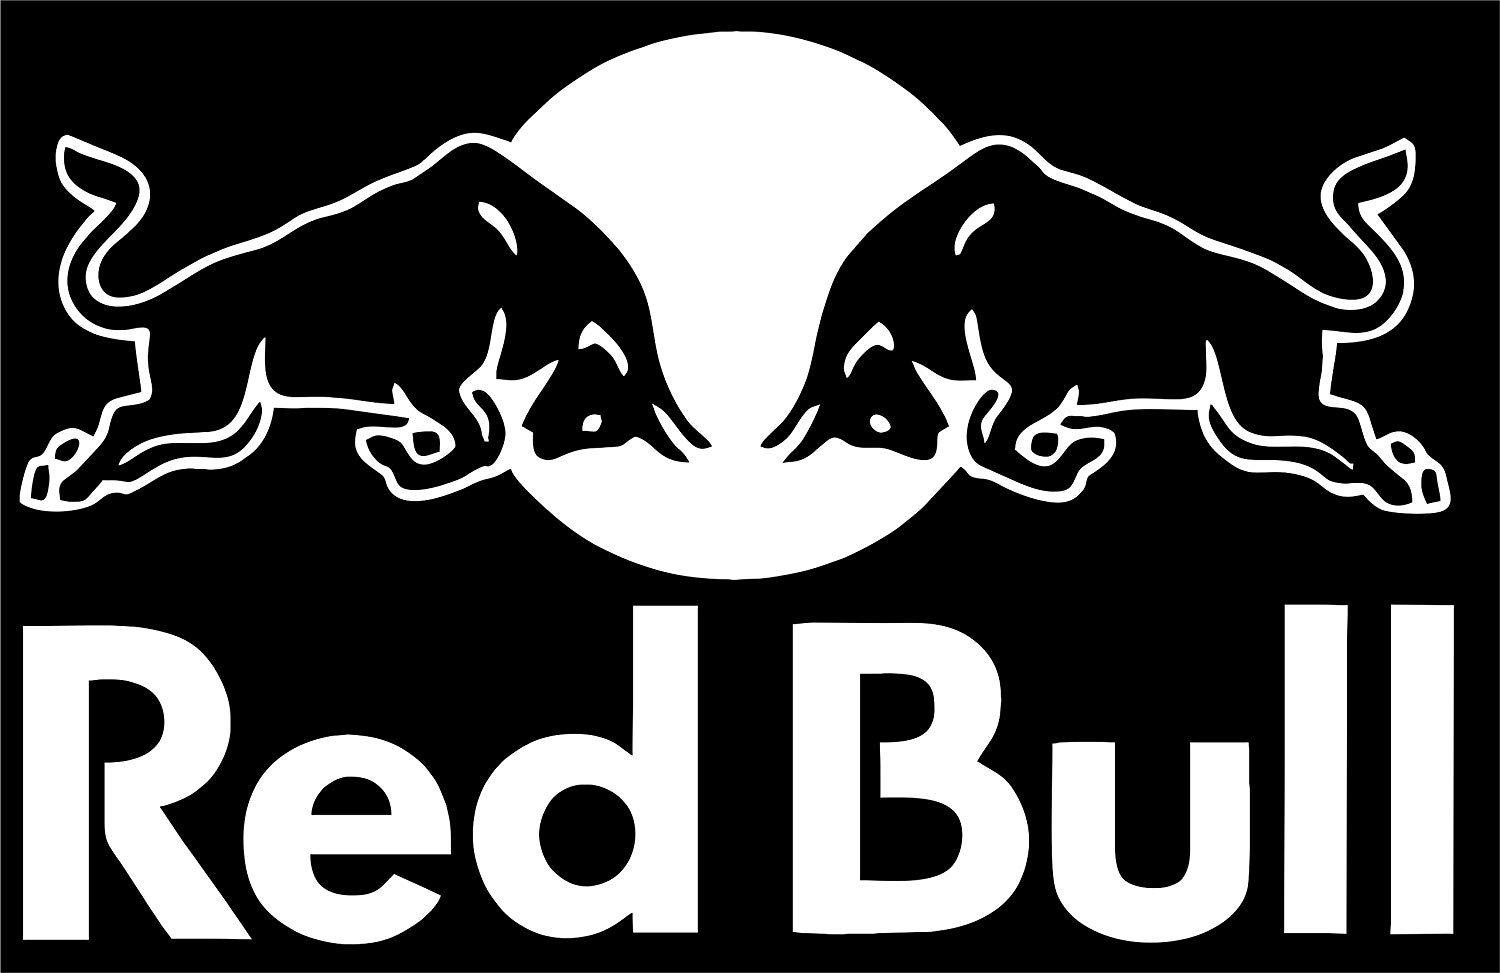 Black White and Red Bull Logo - Amazon.com: Redbull Logo (Black): Automotive